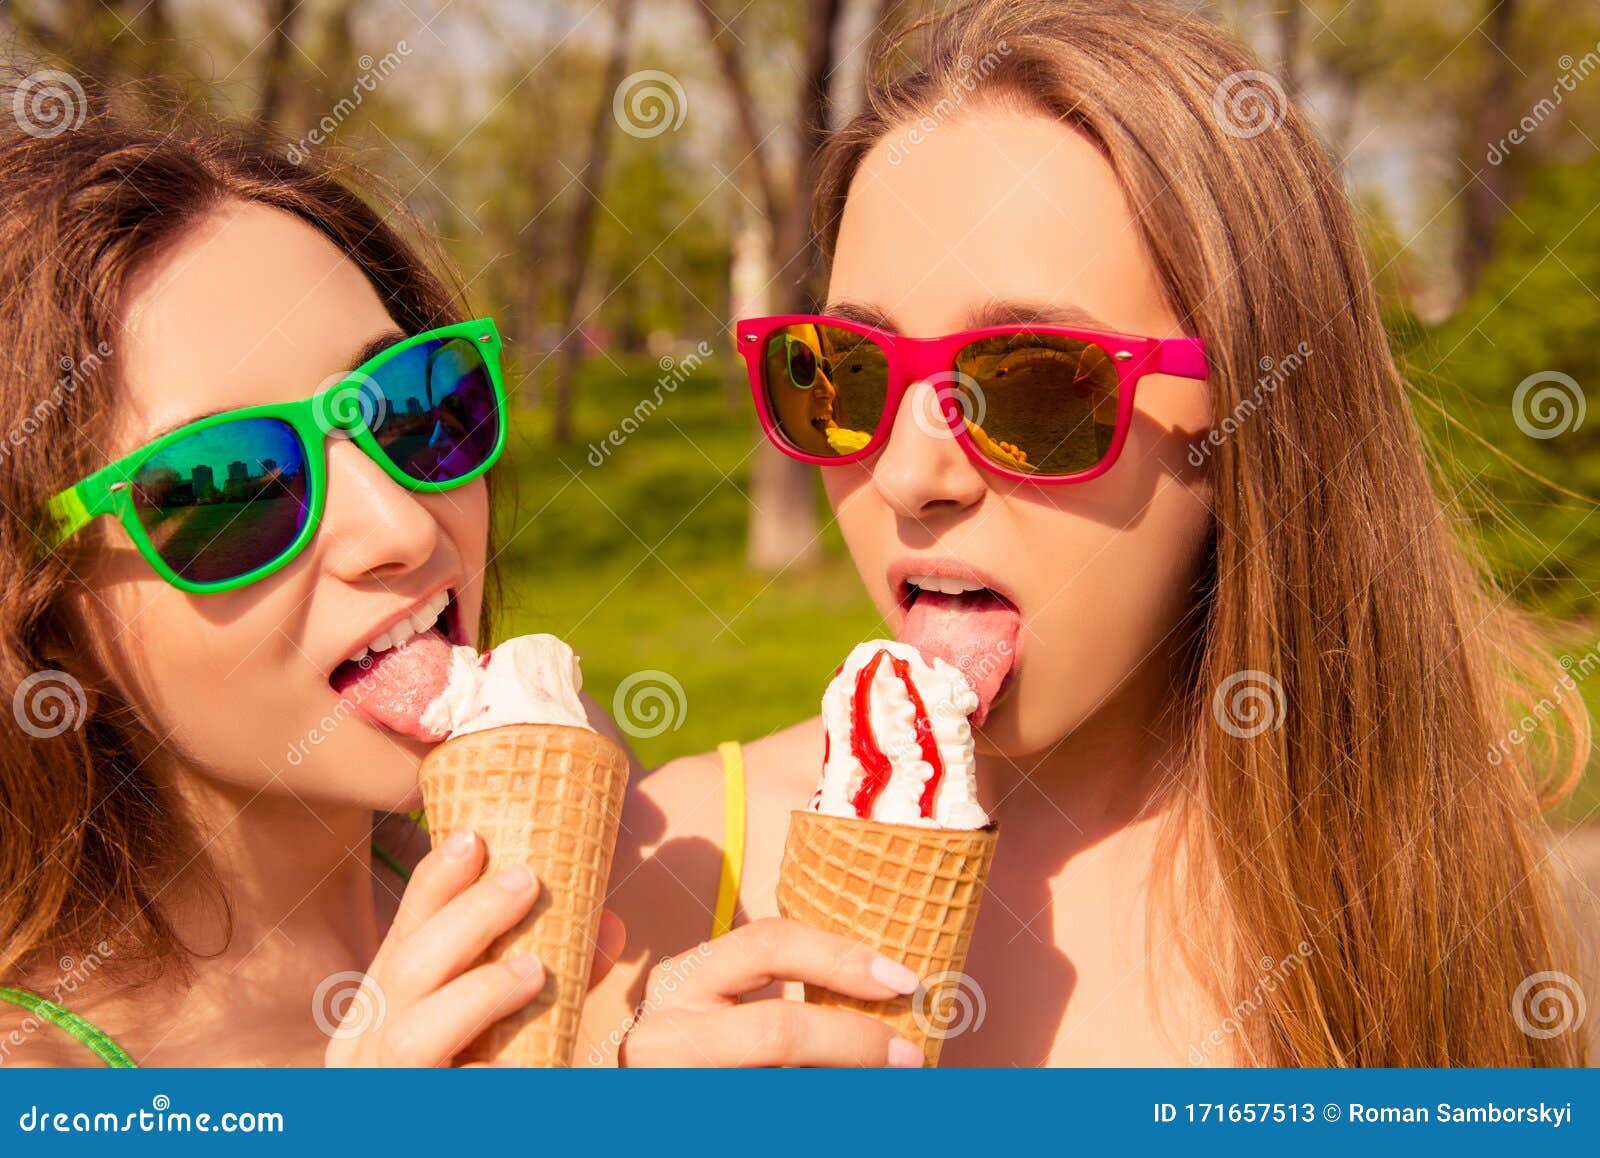 Two girls lick. Мороженое для женщин. Две девушки лижут мороженое. Девушка облизывает мороженое. Девушка лижет мороженое.